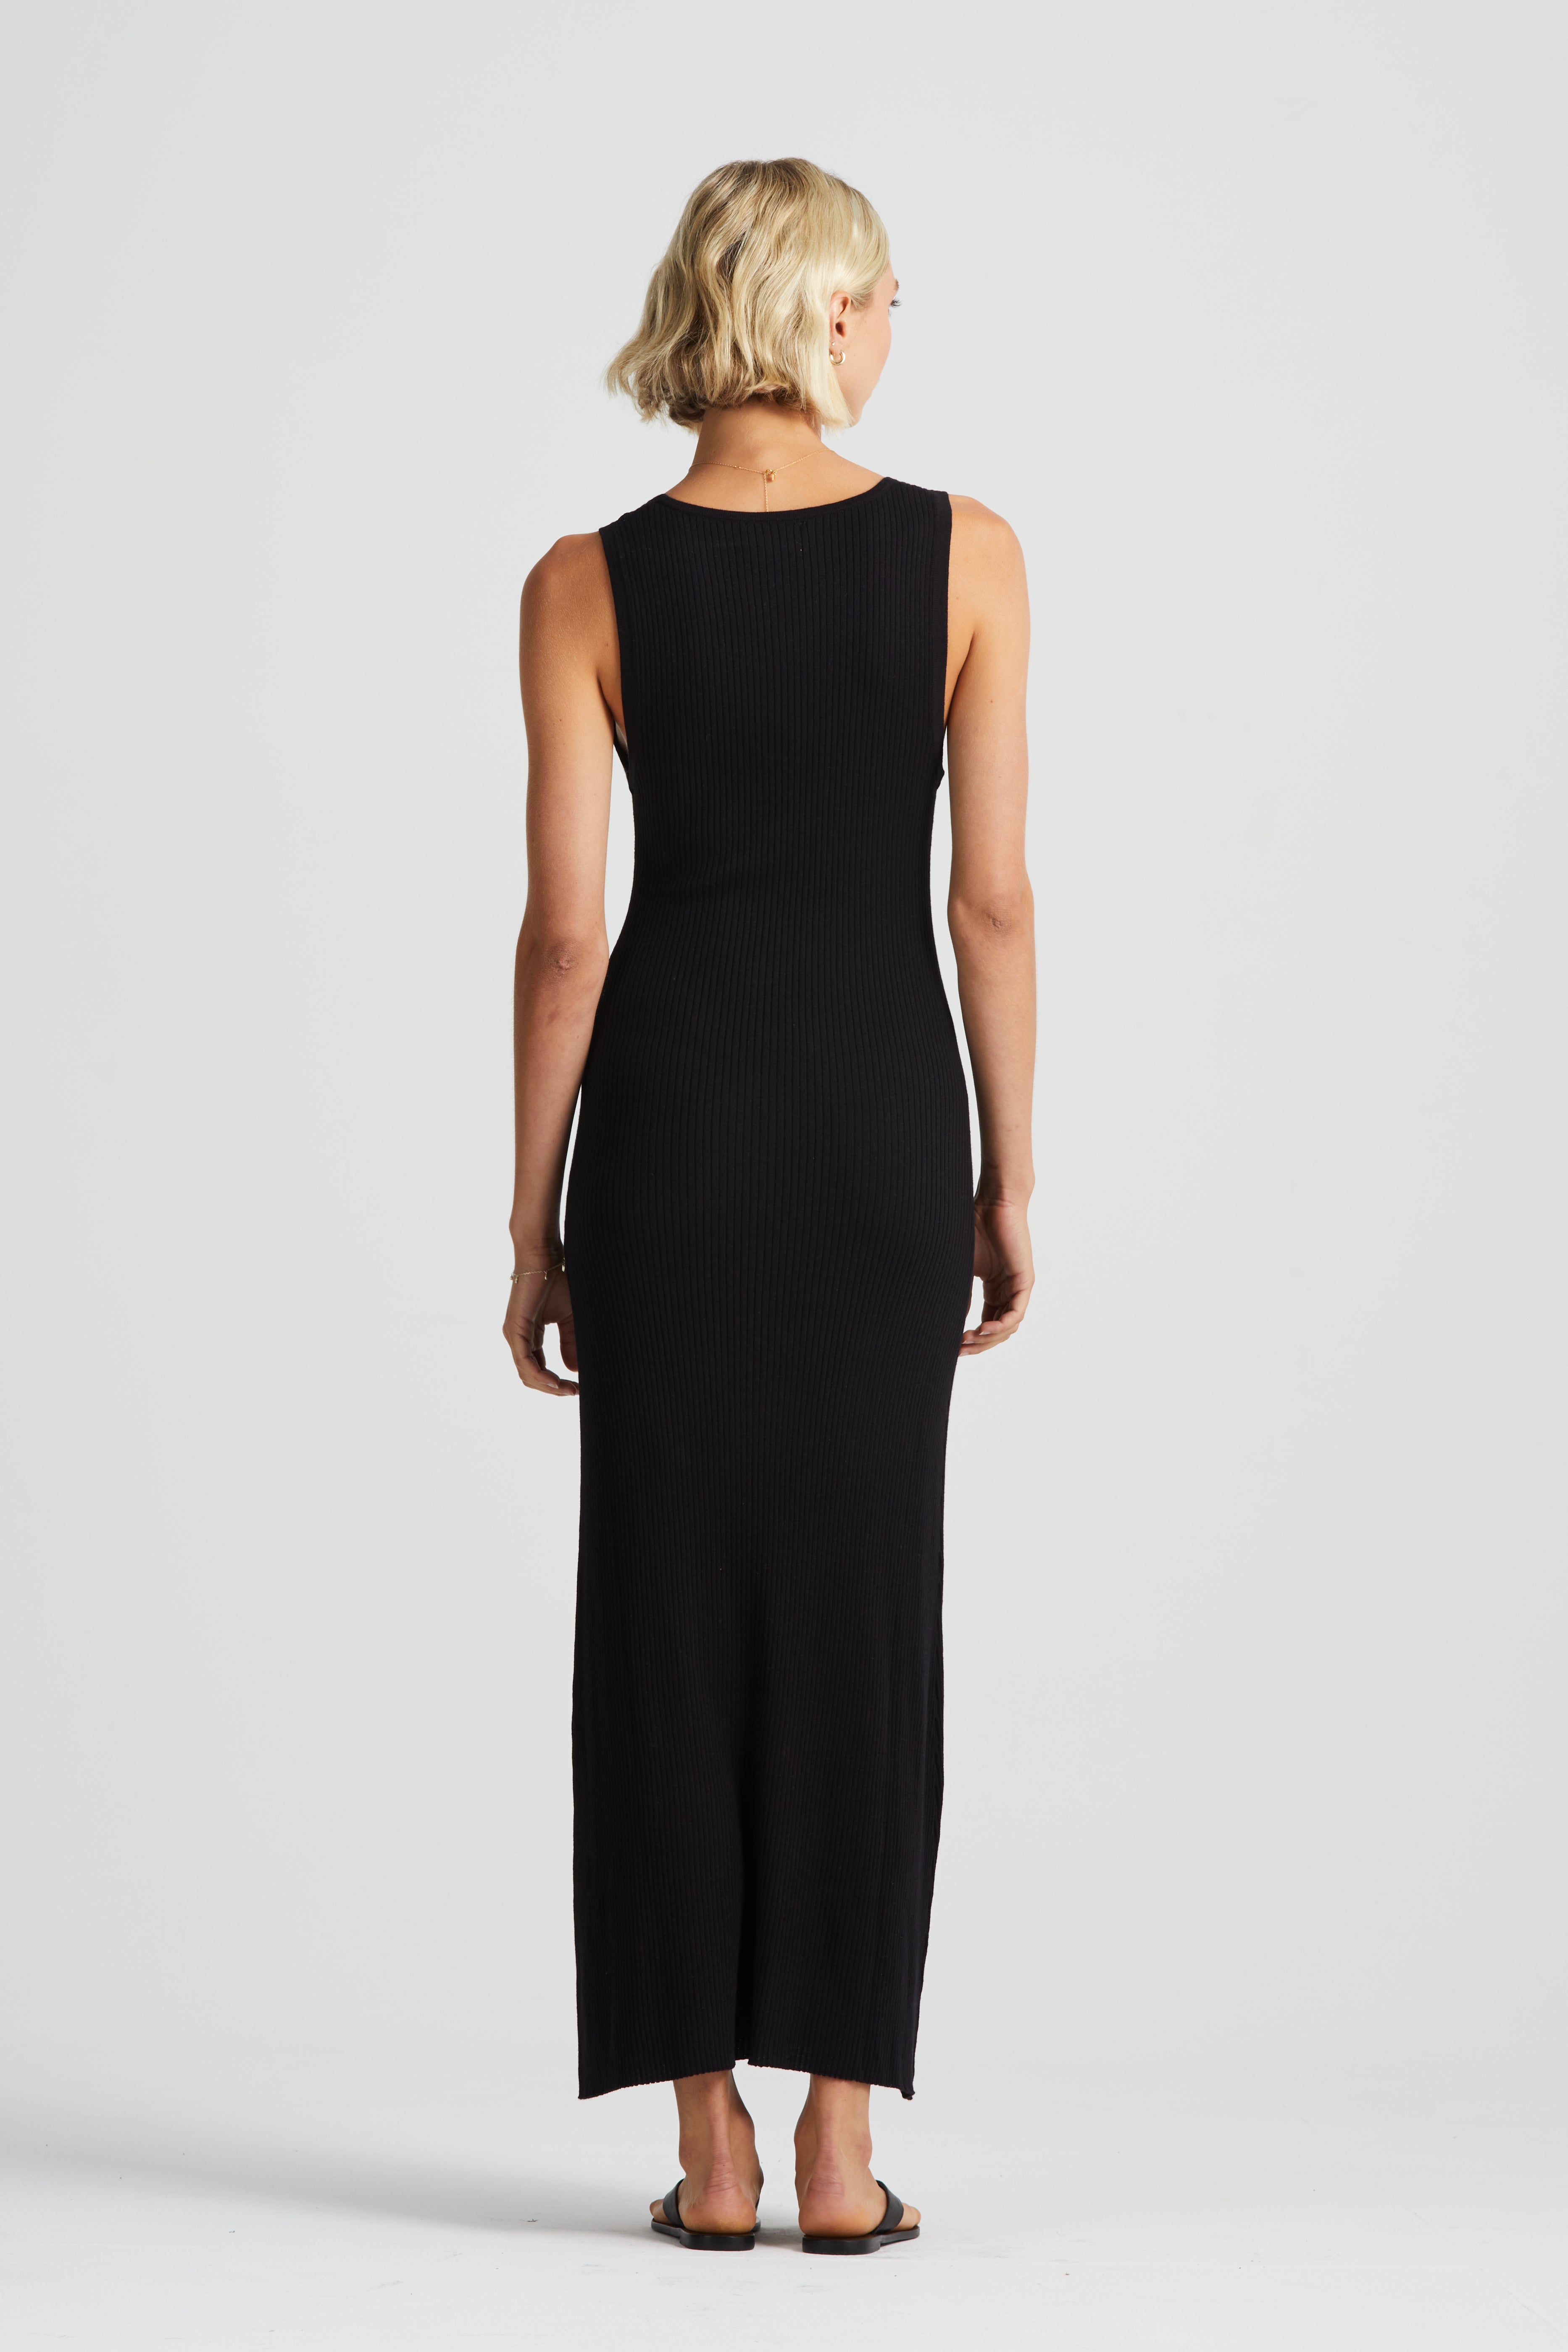 The Linear Sleeveless Knit Dress | Black $360